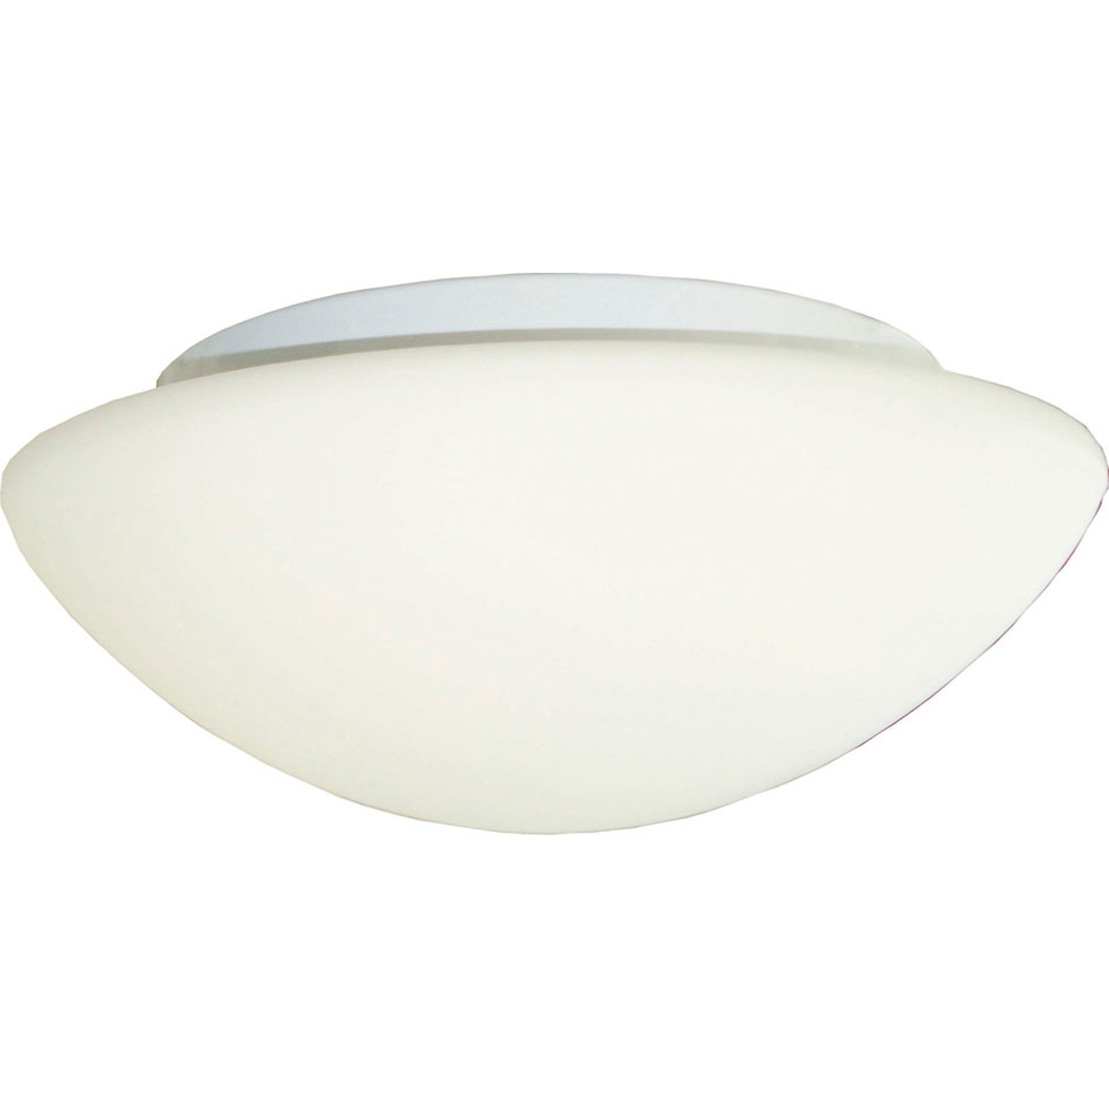 LeuchtenDirekt TAMMO - Ceiling light - White - E27 - 2 x 60W (excl.)